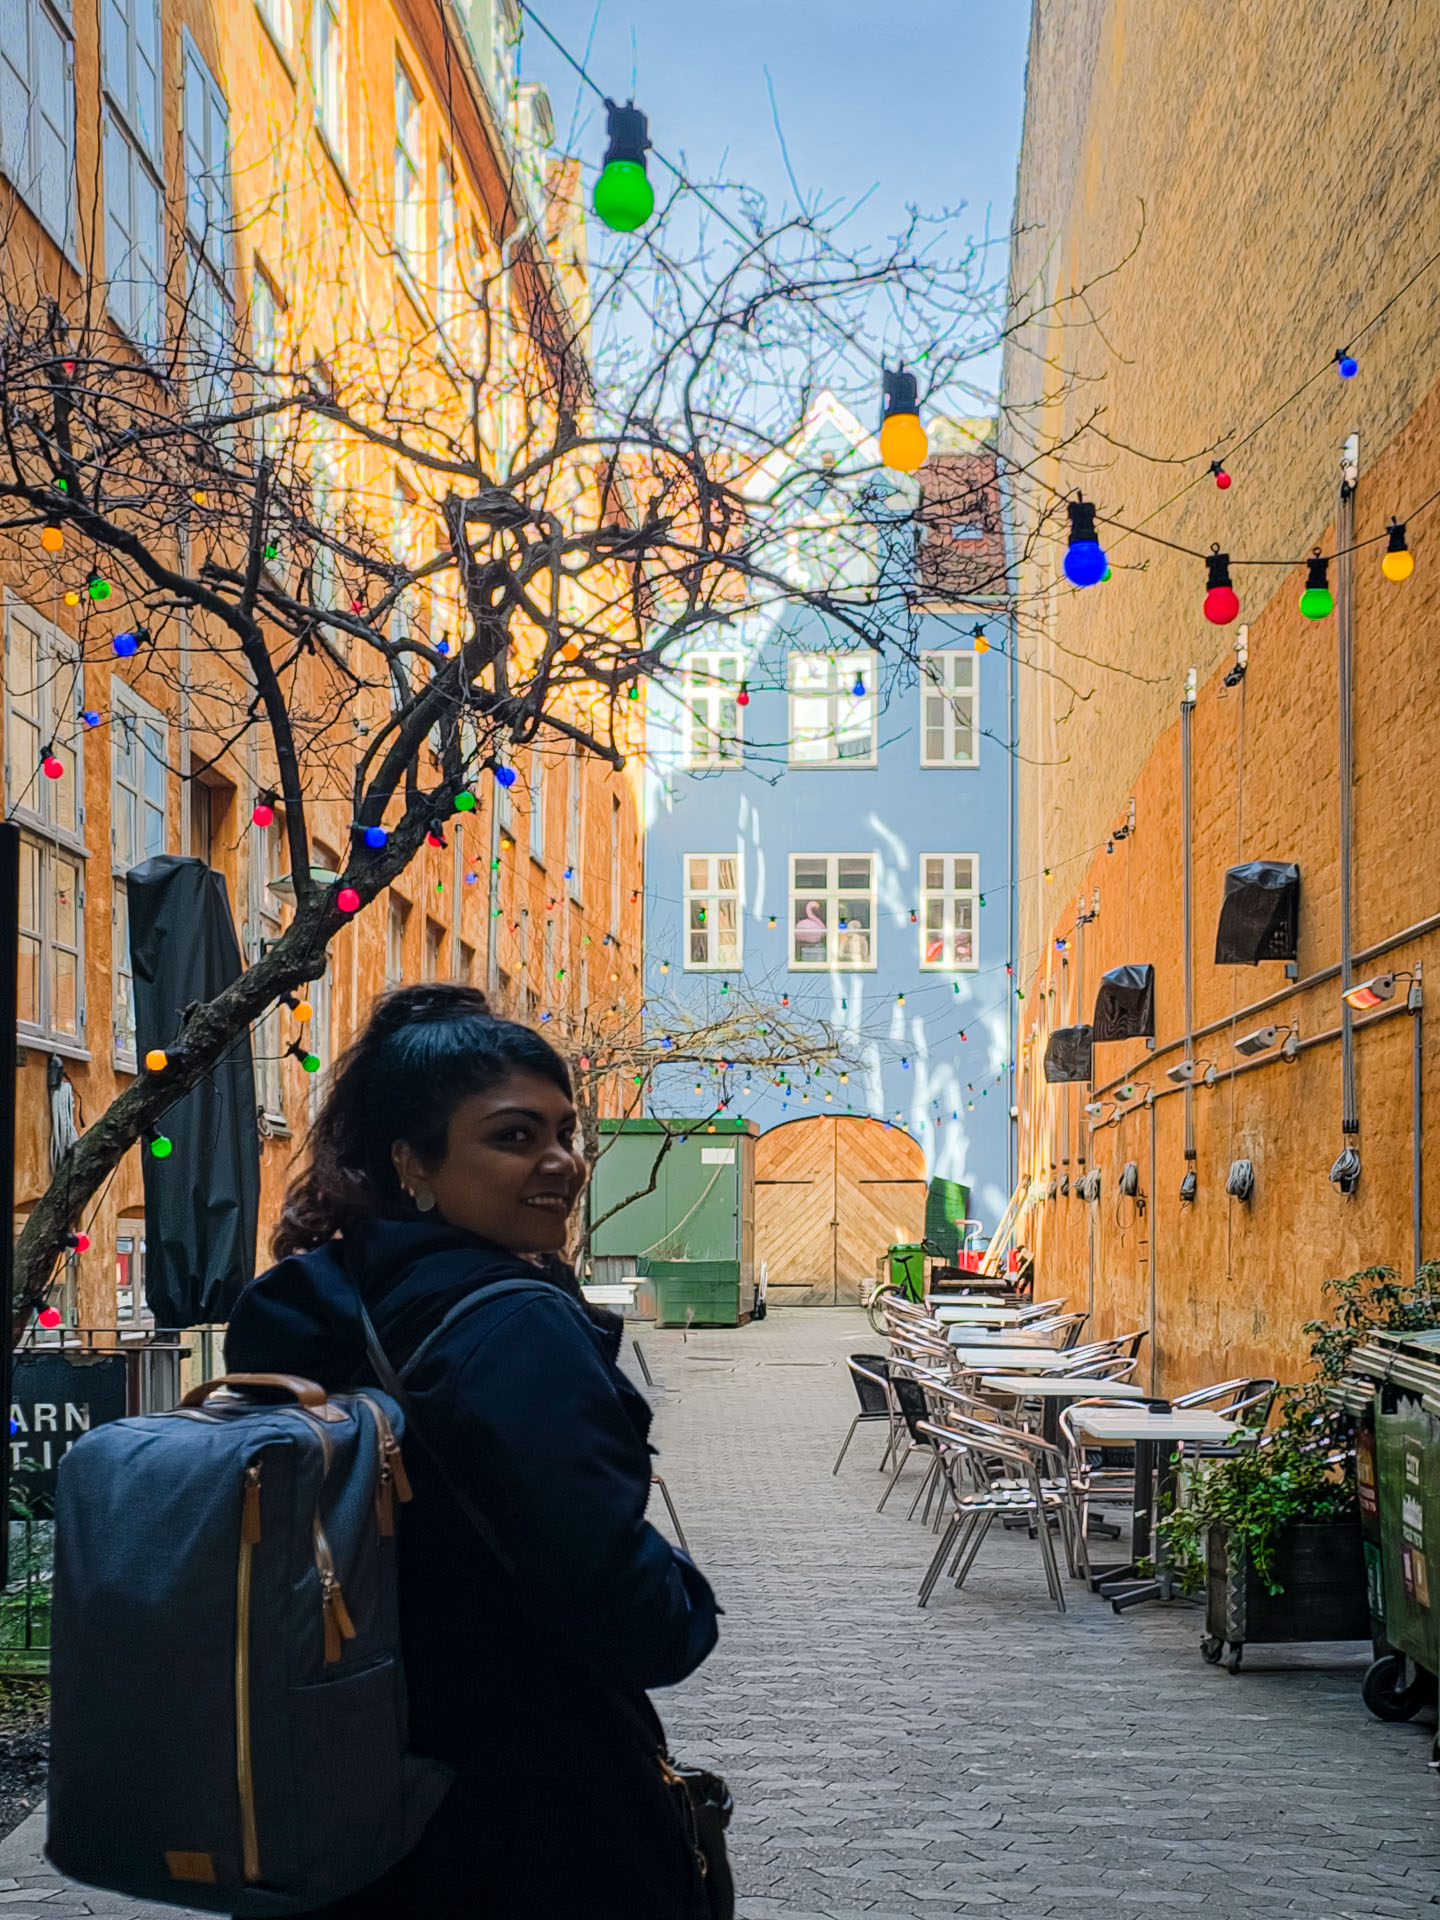 Instamgram alley off Strøget in Copenhagen